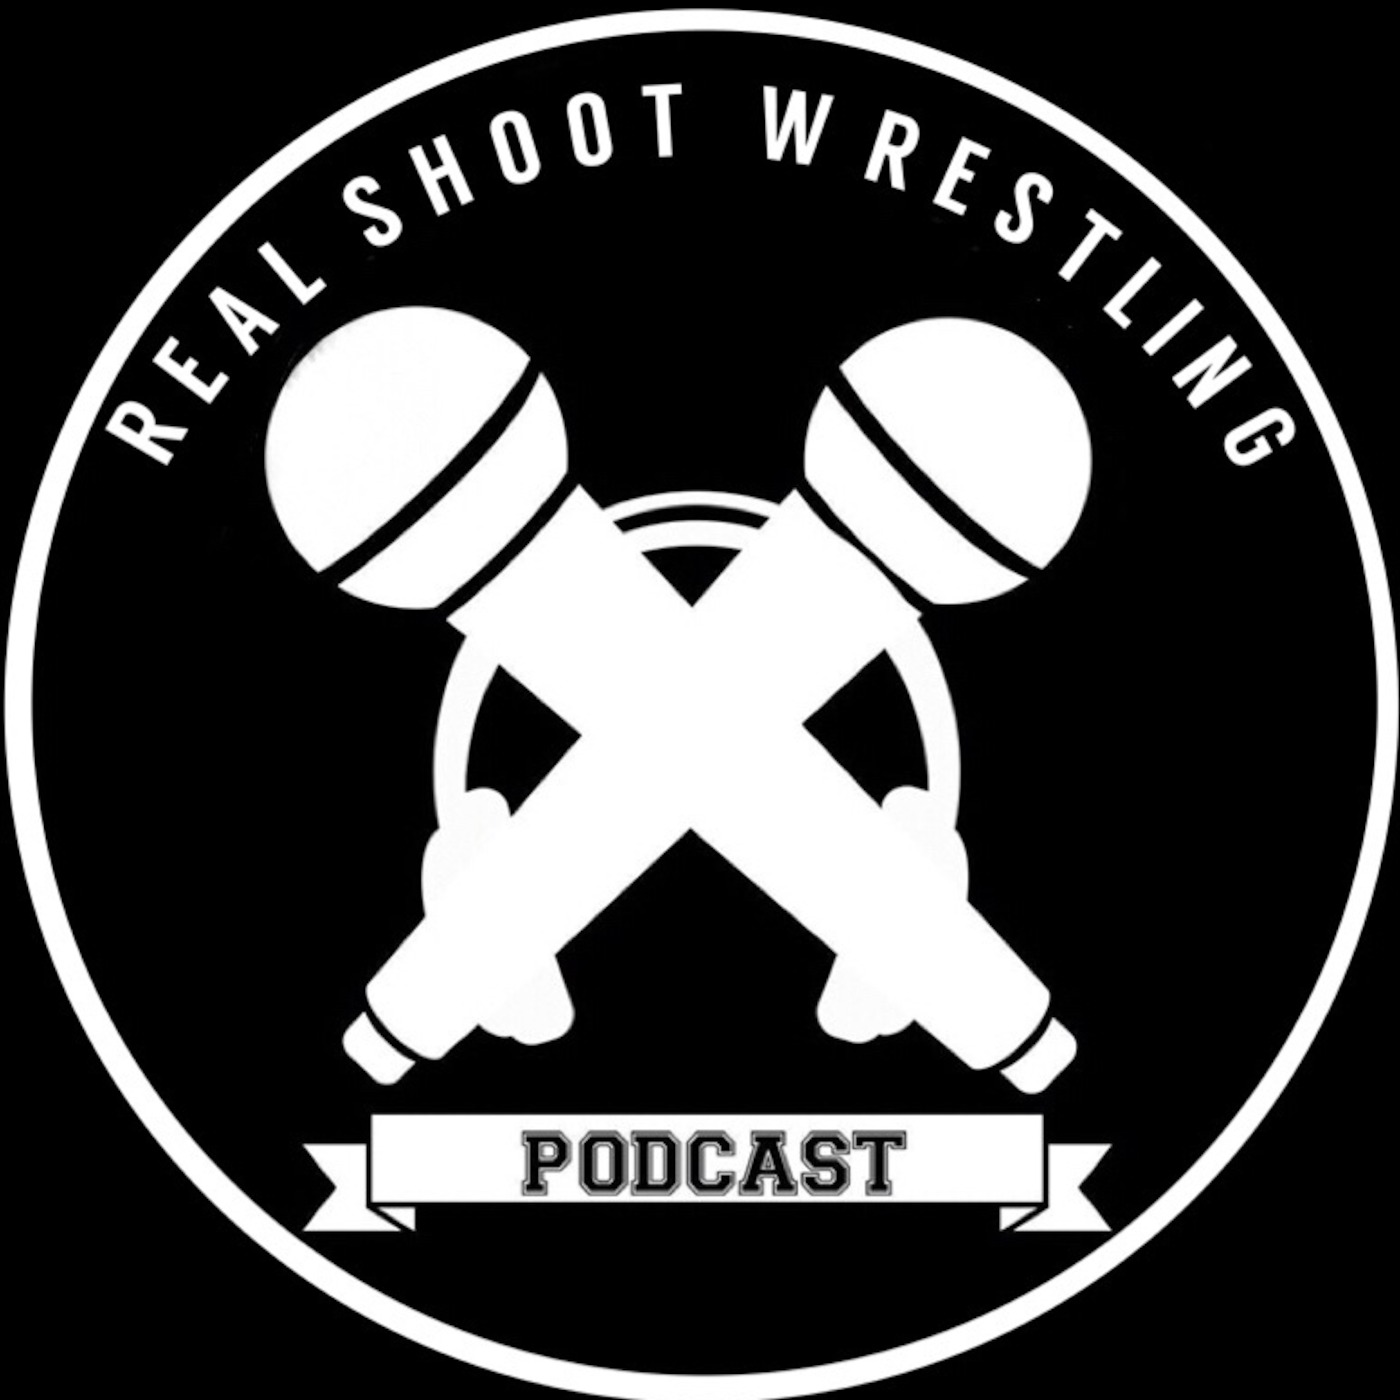 Real Shoot Wrestling Podcast